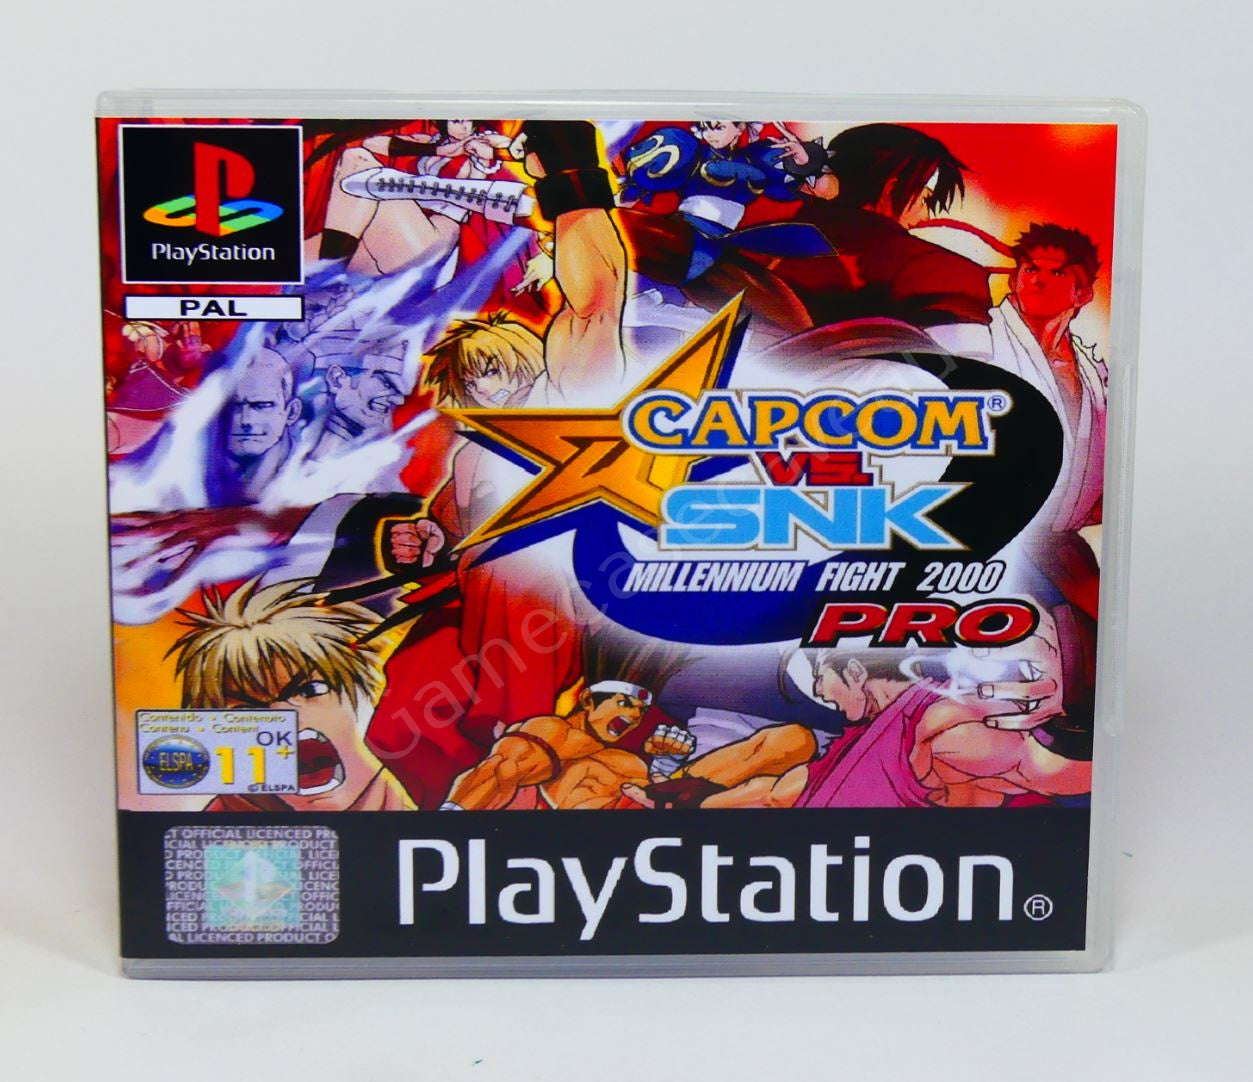 Capcom vs SNK Millennium Fight 2000 Pro - PS1 Replacement Case